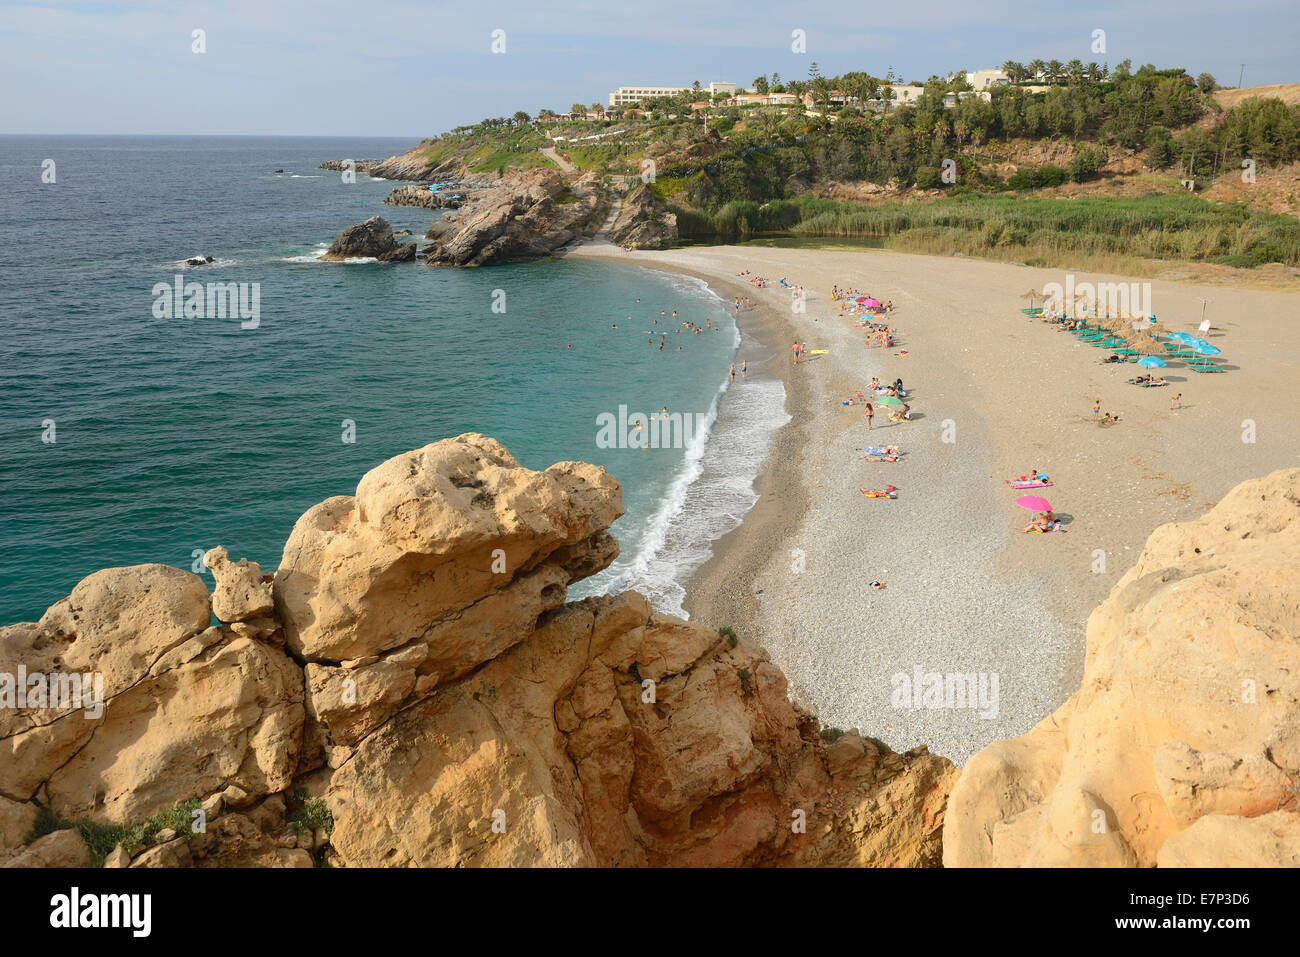 Europe, Greece, Greek, Crete, Mediterranean, island, Panormo, beach, sea, tourists Stock Photo